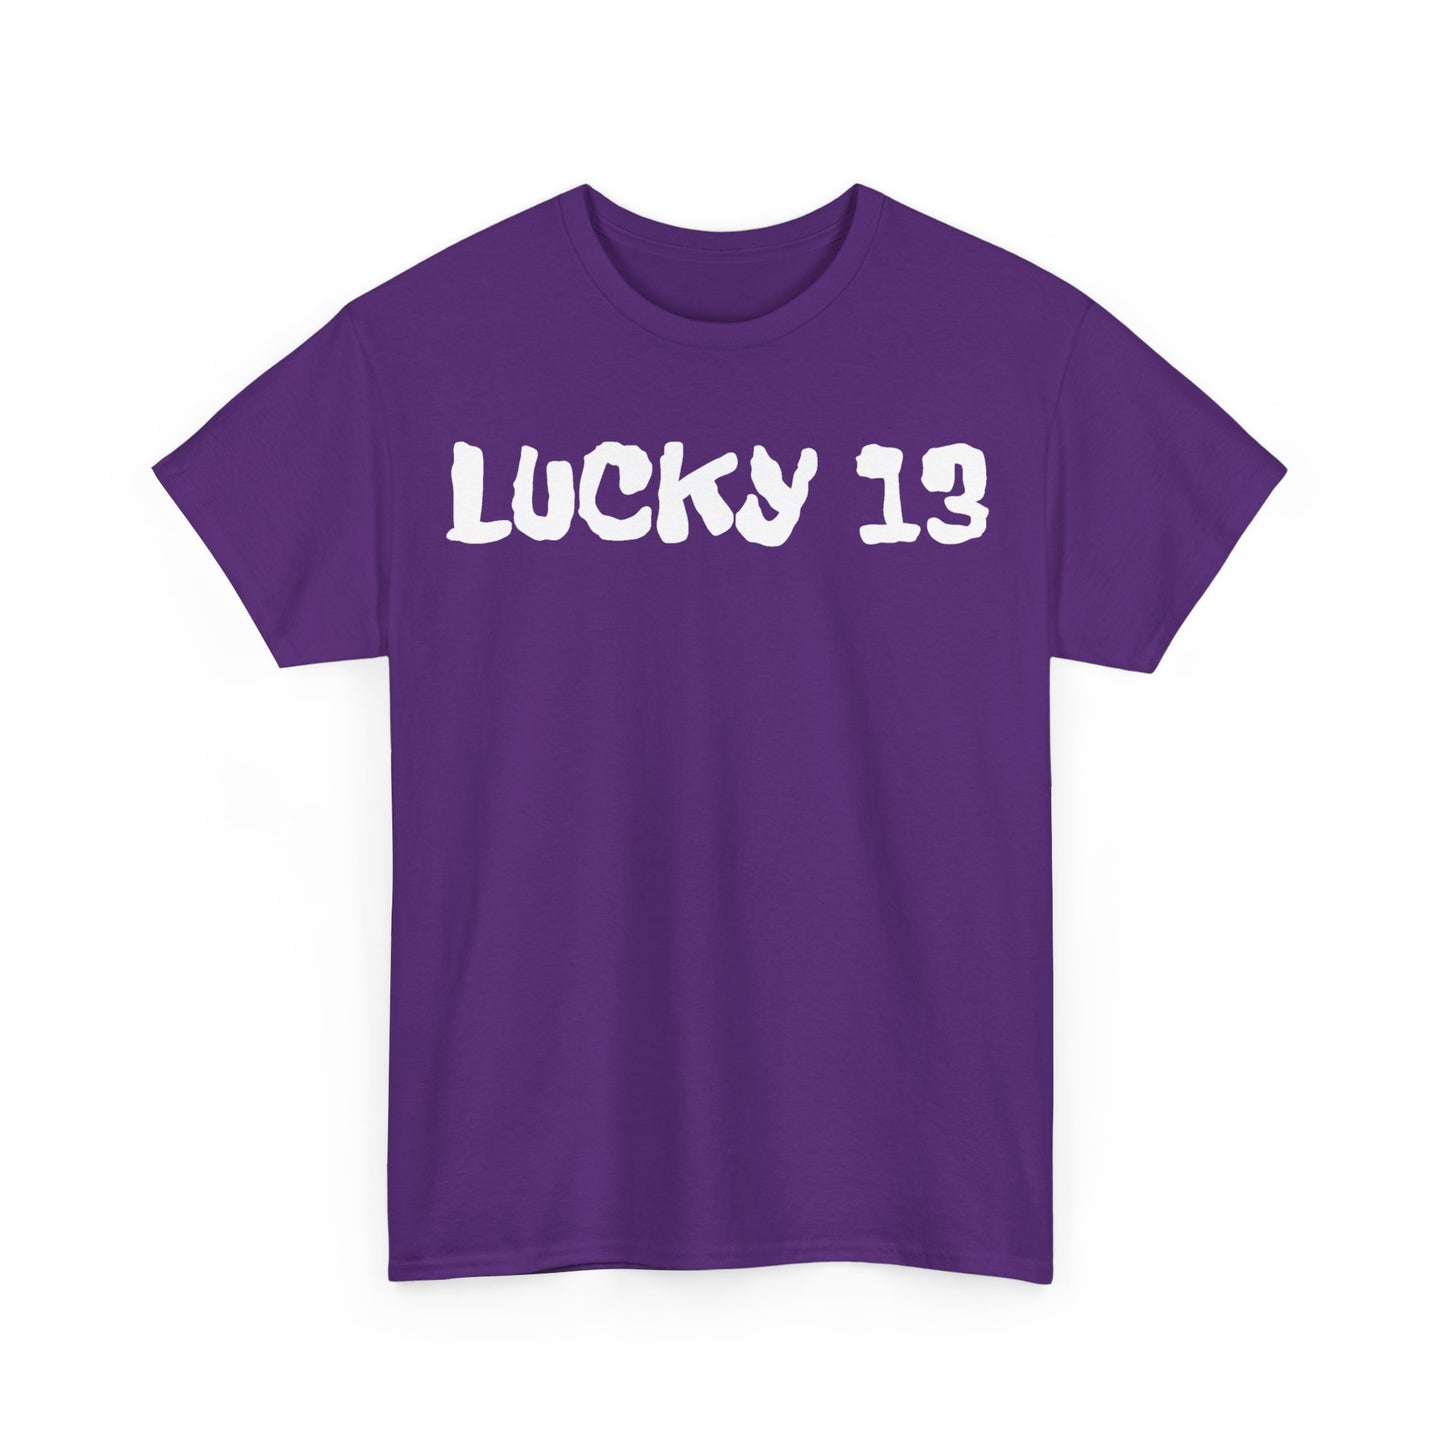 Lucky 13 Tee